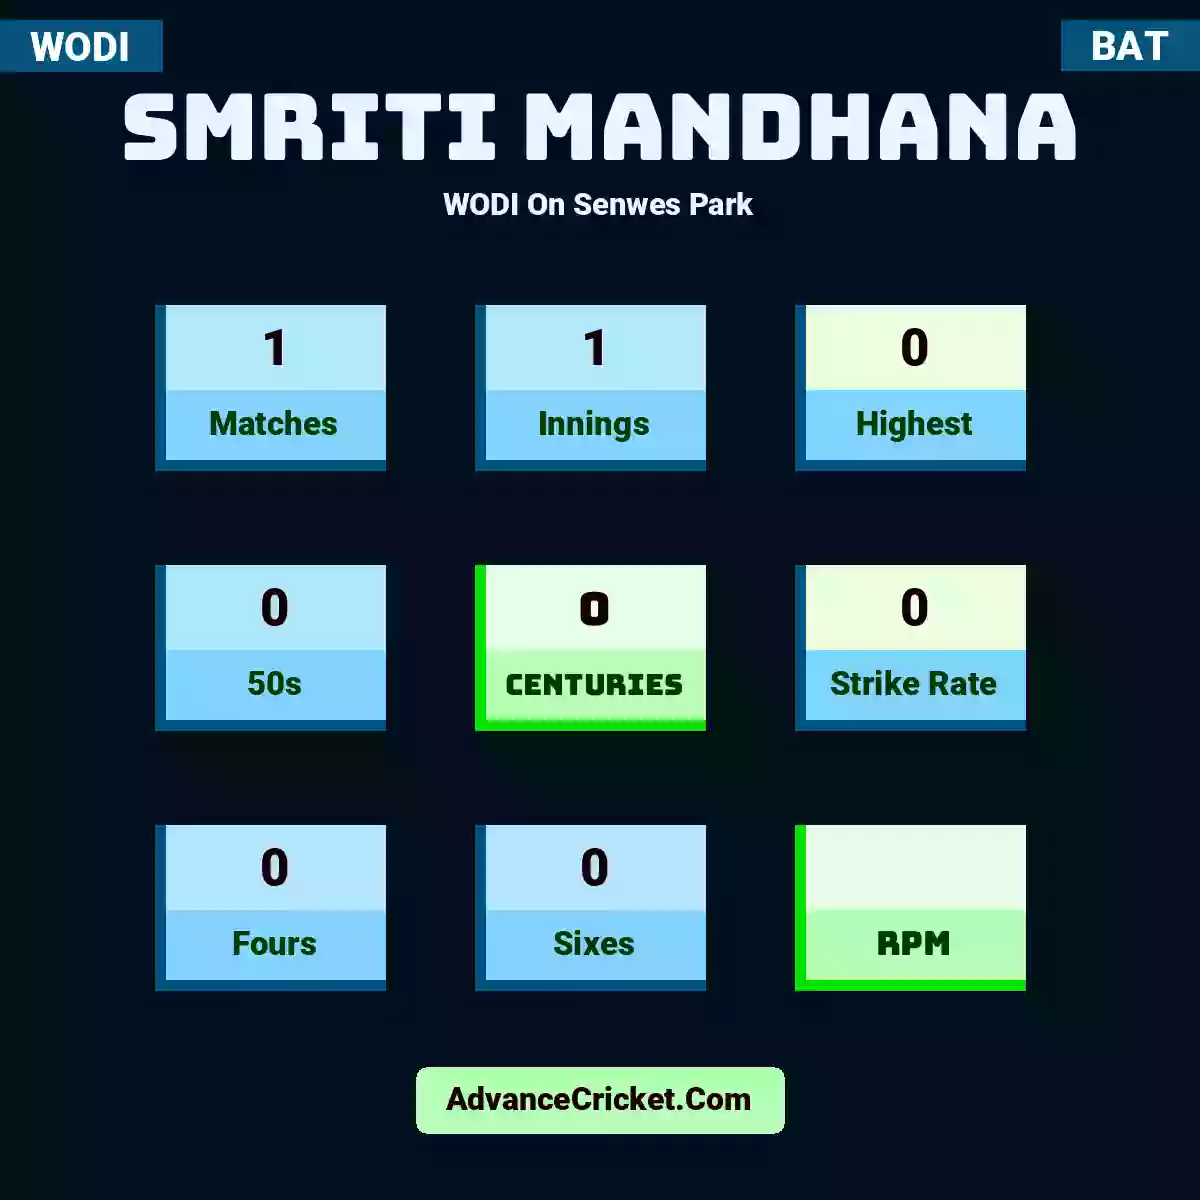 Smriti Mandhana WODI  On Senwes Park, Smriti Mandhana played 1 matches, scored 0 runs as highest, 0 half-centuries, and 0 centuries, with a strike rate of 0. S.Mandhana hit 0 fours and 0 sixes.